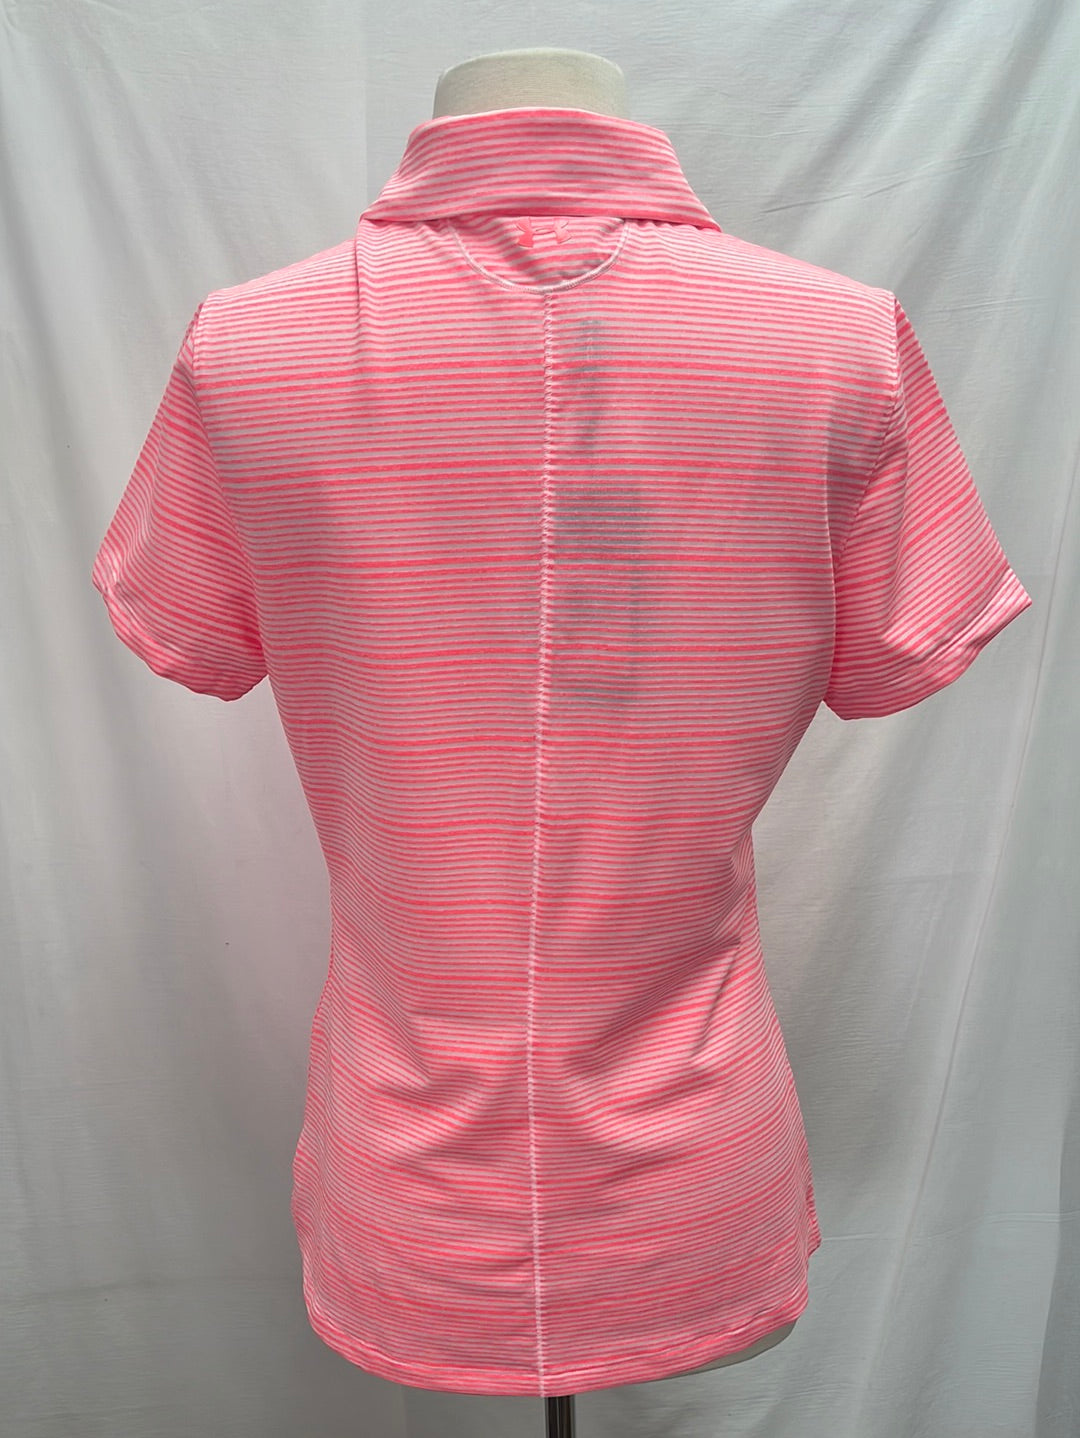 NWT -- Under Armour 5-Button Women's Pink + White Golf Polo Shirt -- M